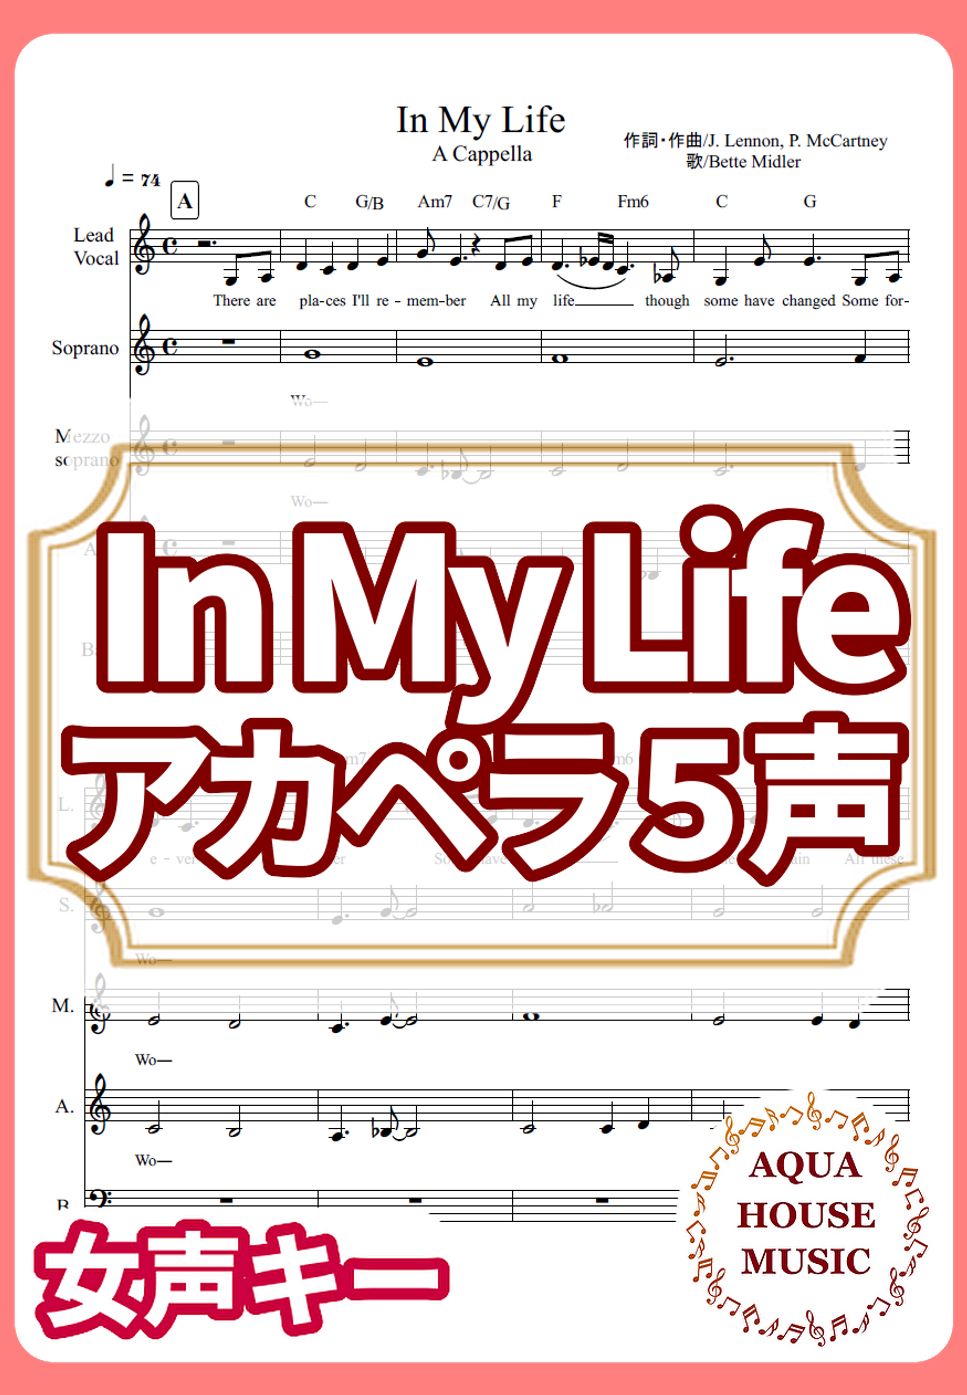 Bette Midler - In My Life (アカペラ楽譜♪5声ボイパなし) by 飯田 亜紗子